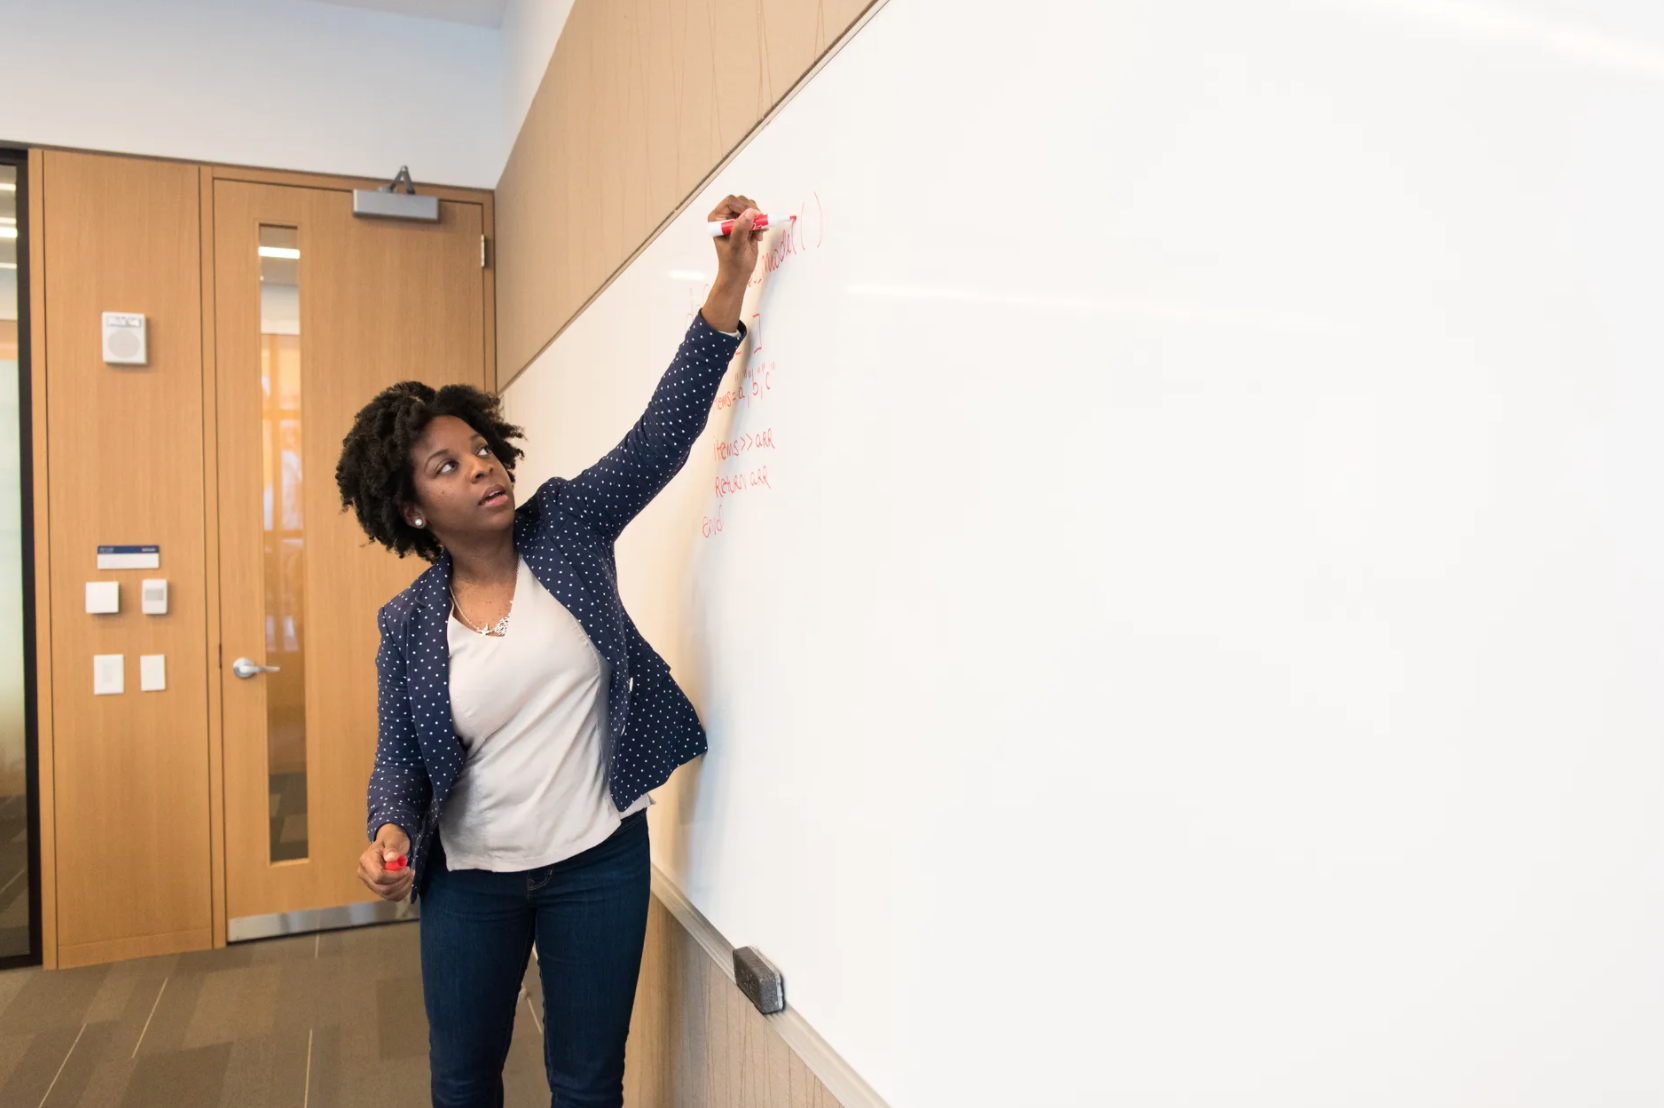 A teacher writing on a whiteboard